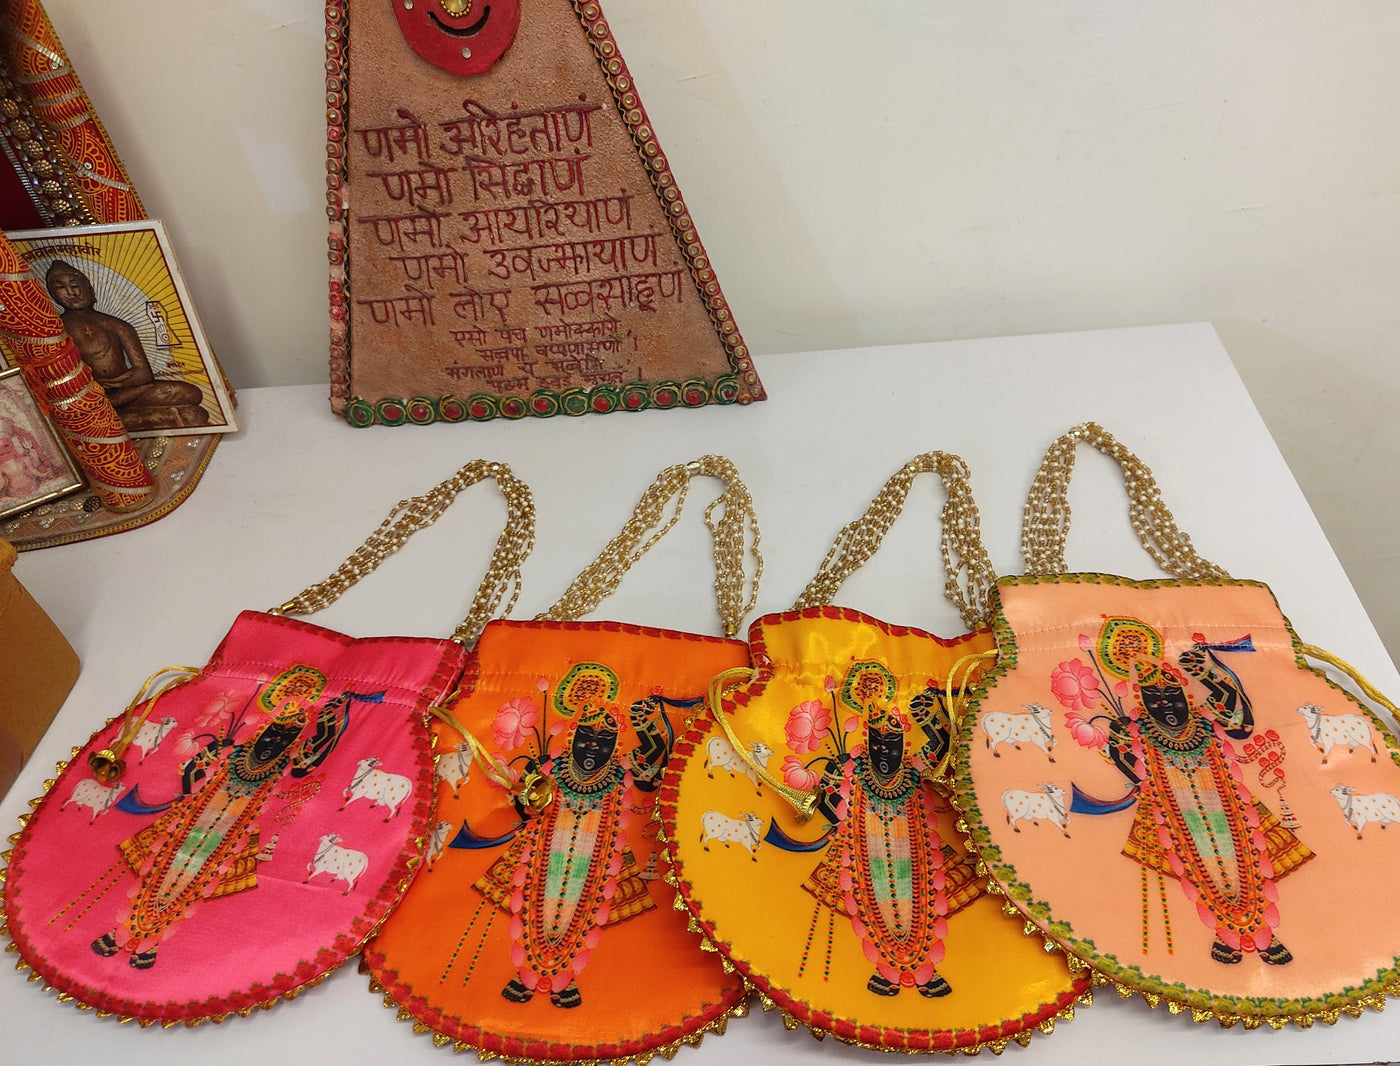 110 Rs each on buying 🏷in bulk | Call 📞 at 8619550223 Women's Potli Bag LAMANSH® Shreenath ji 🙏 potli bags for janmashthami giveaways | Shrinath ji potli bags for return gifting in Wedding ,Puja & Festivals